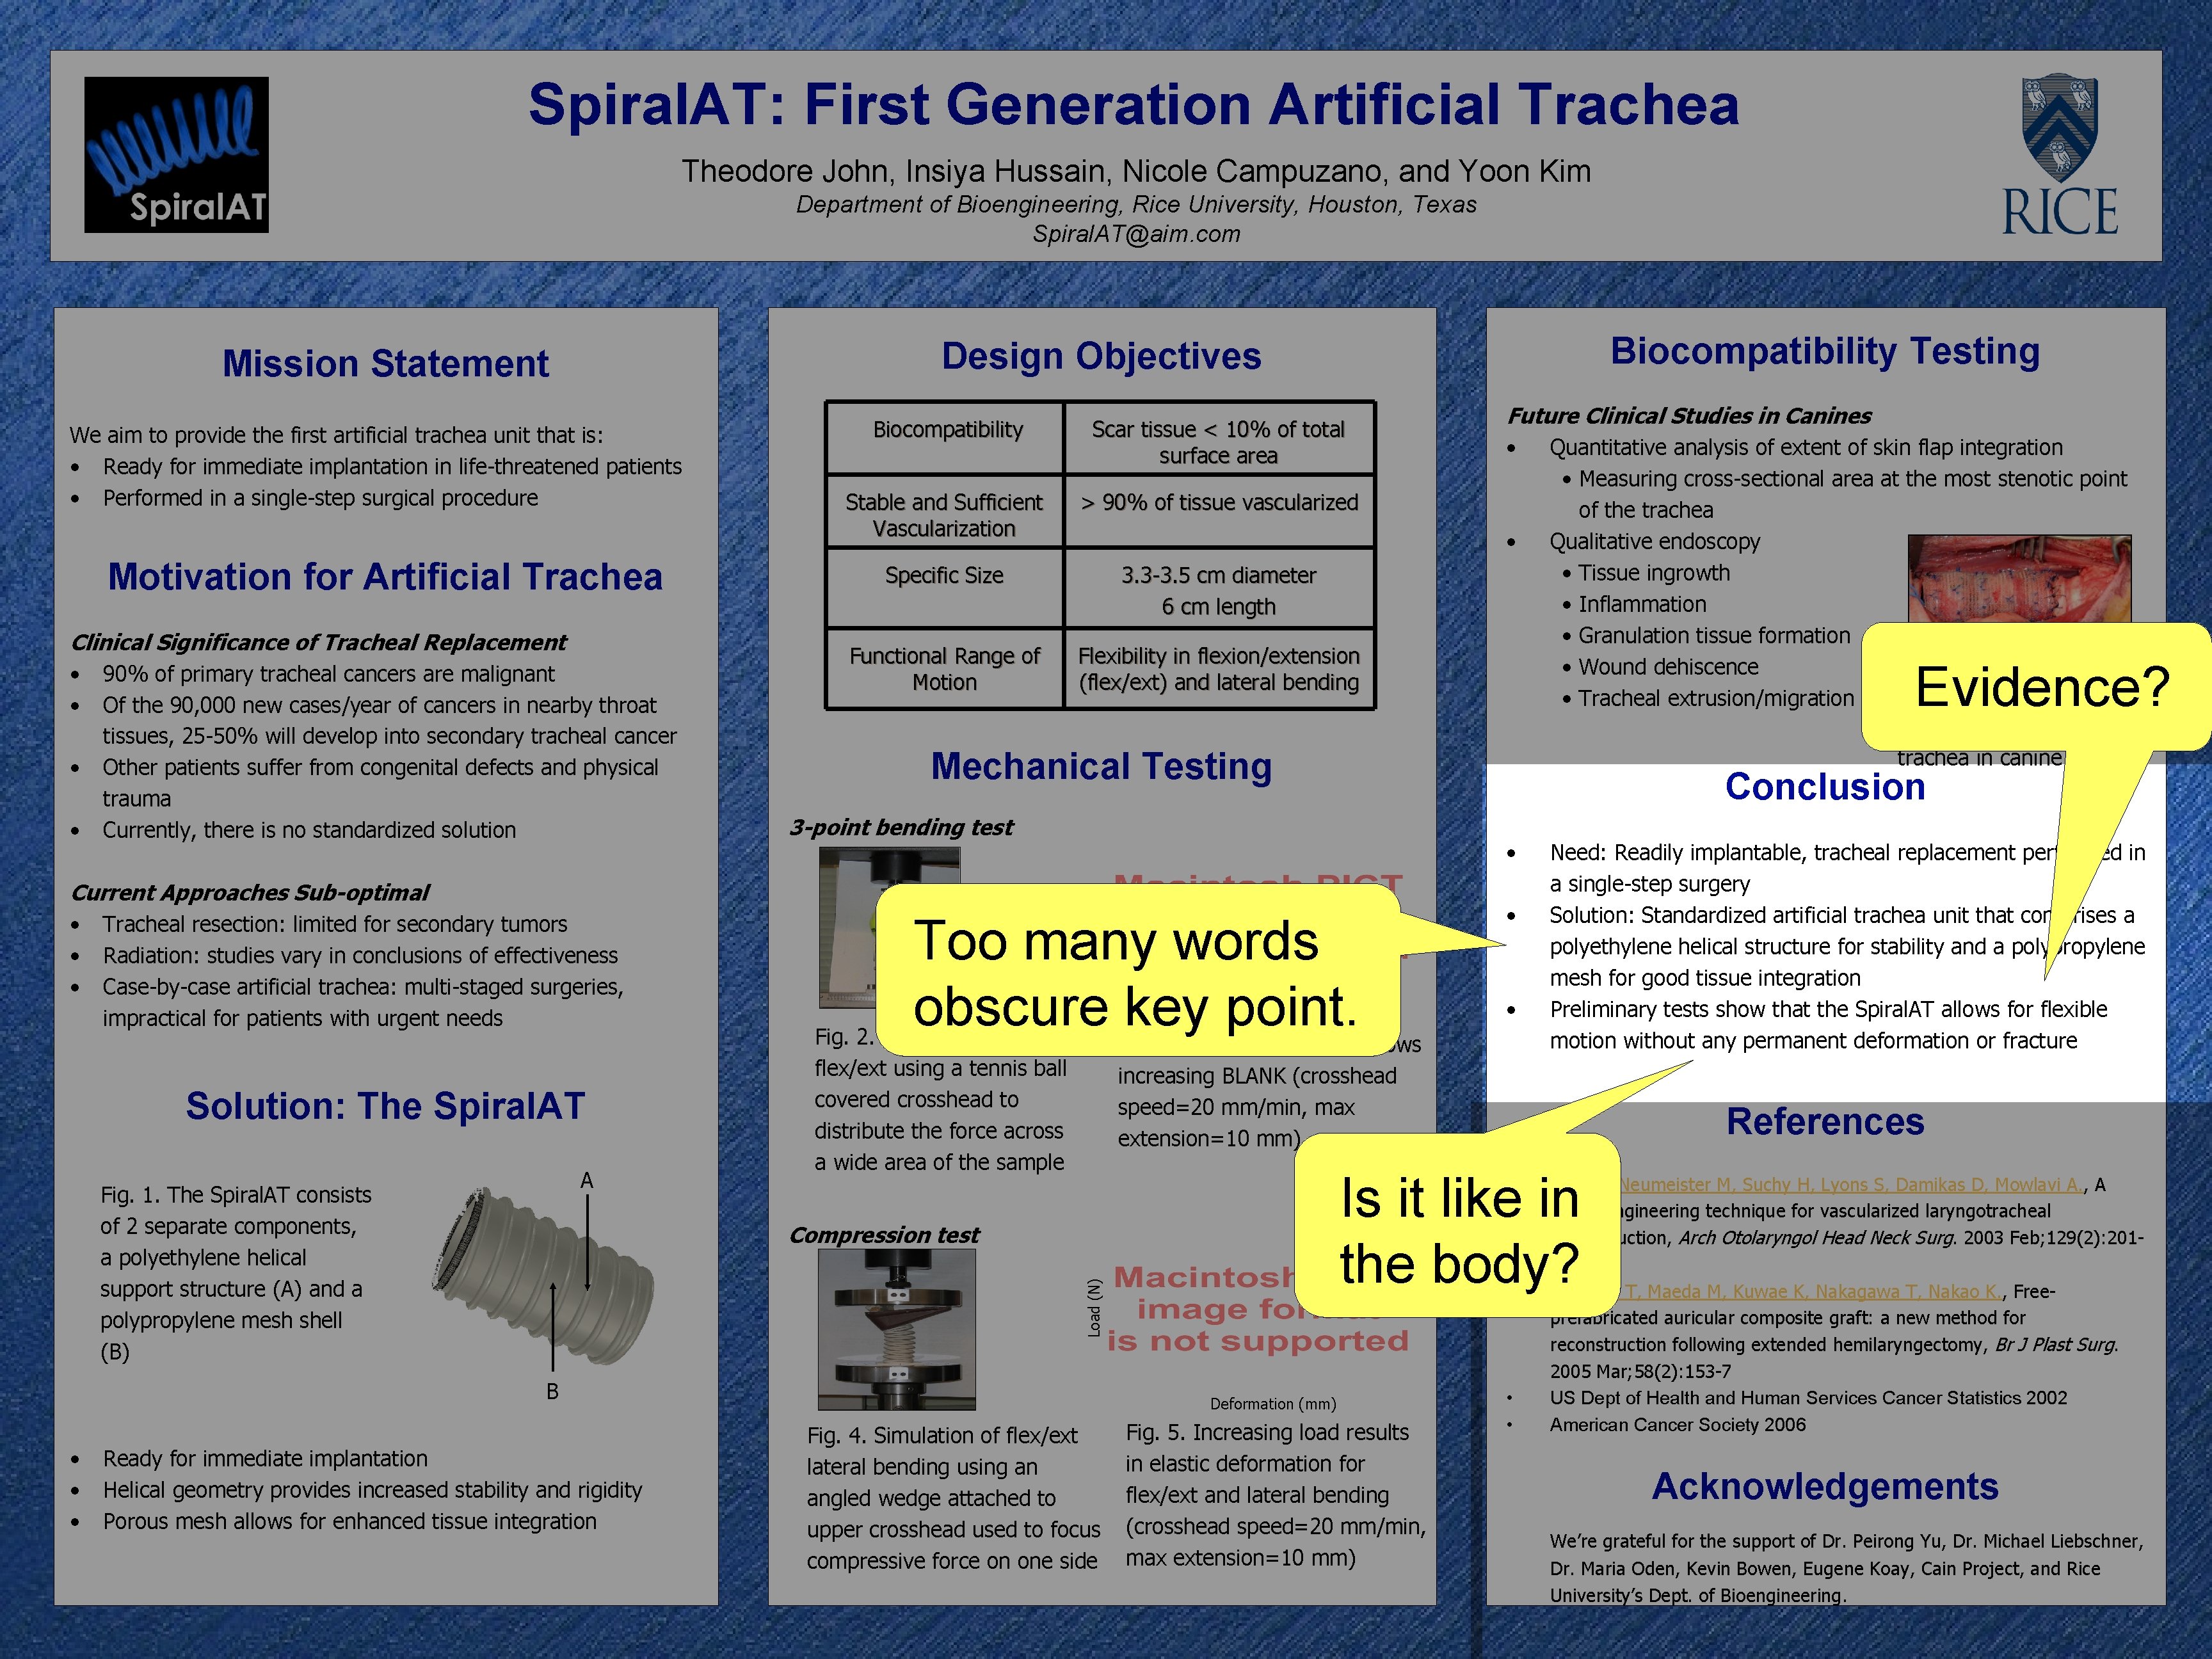 Spiral. AT: First Generation Artificial Trachea Theodore John, Insiya Hussain, Nicole Campuzano, and Yoon